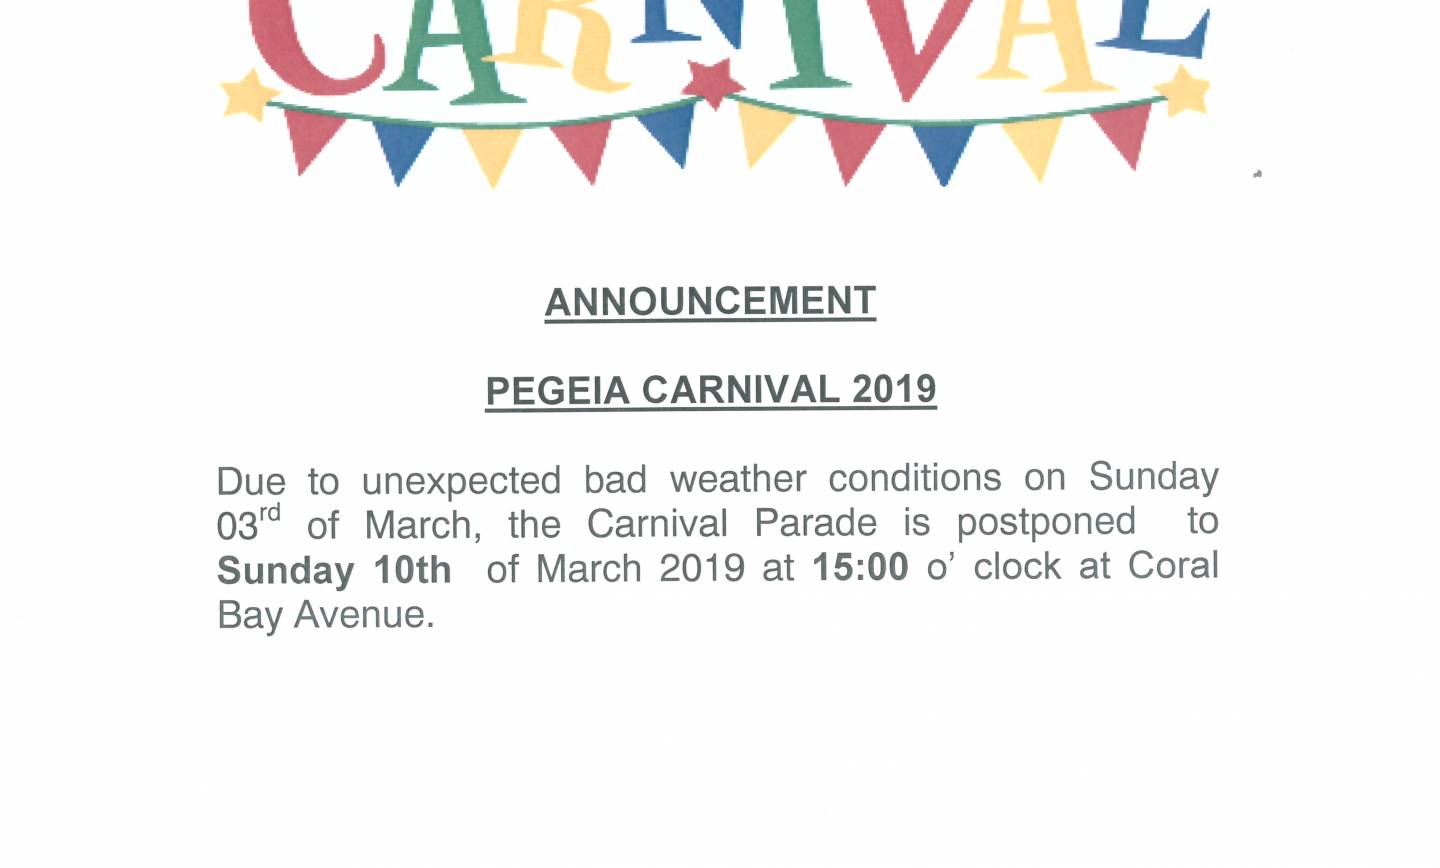 Postponement of the Carnival Parade